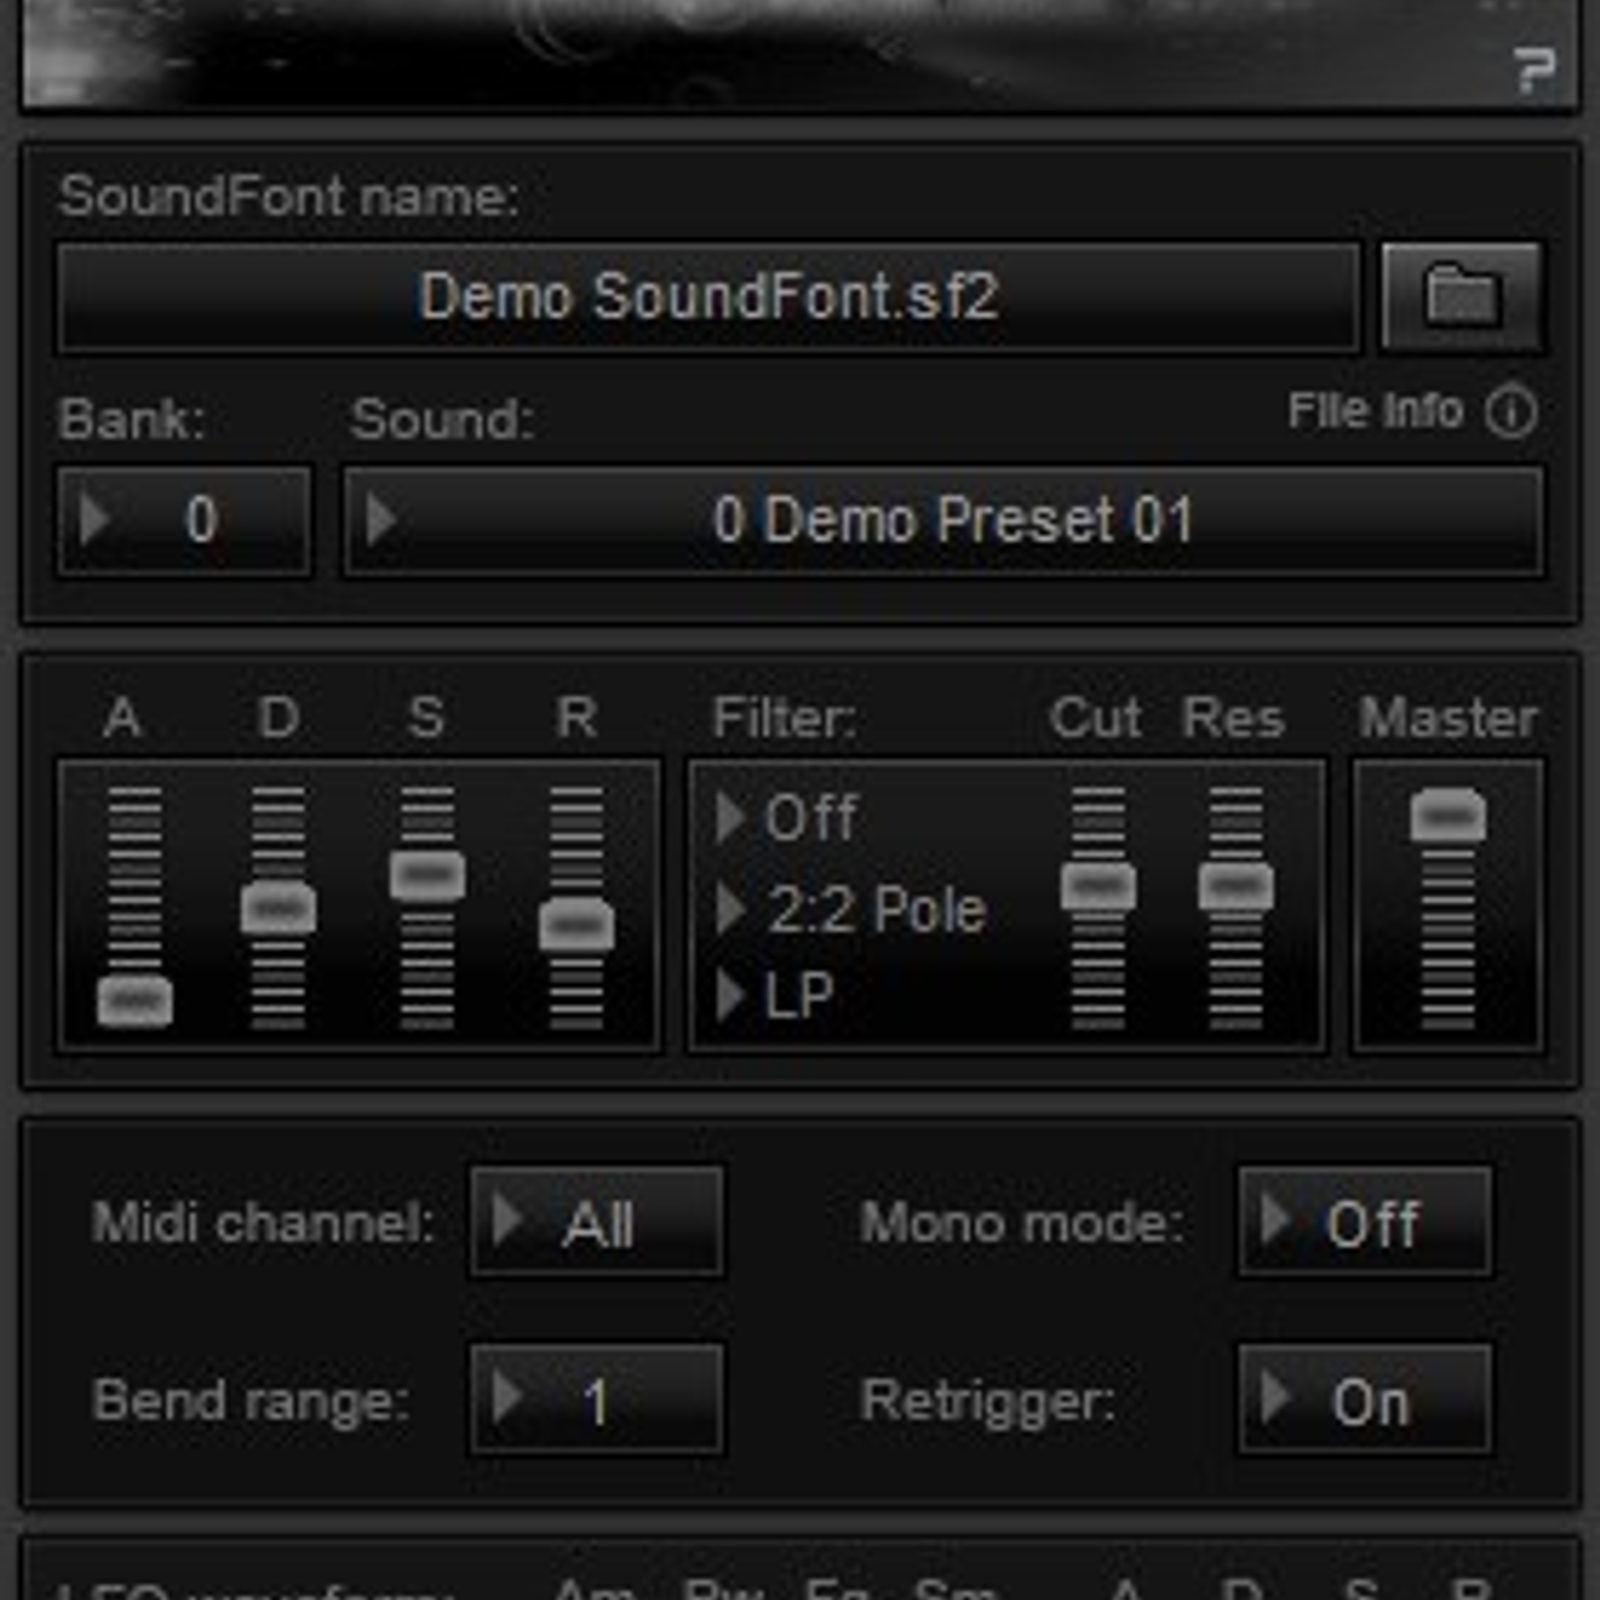 Sound demo